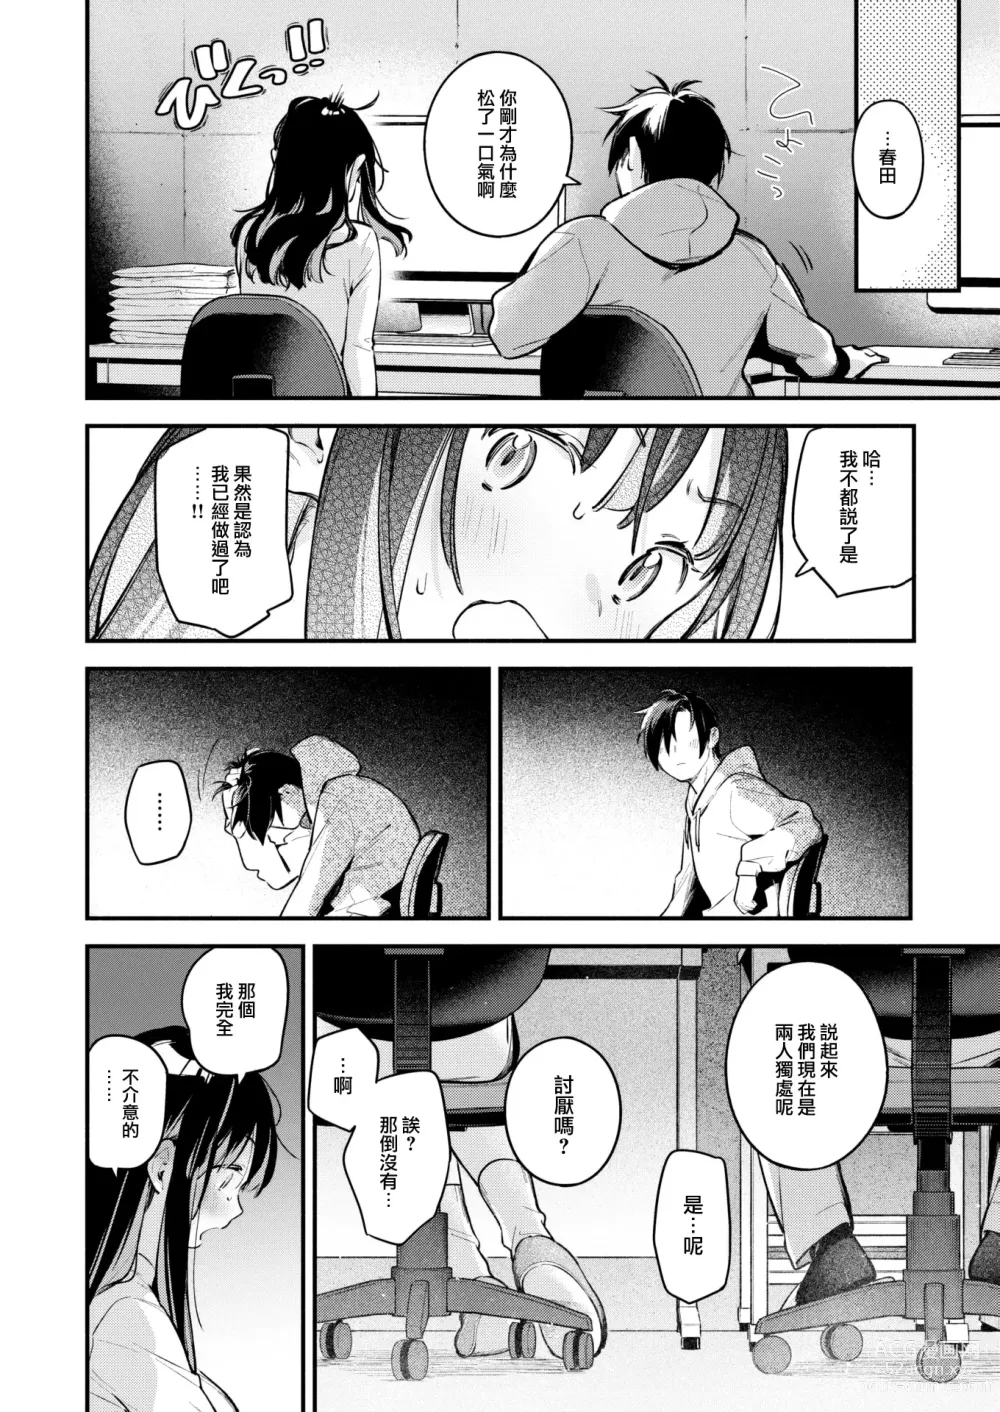 Page 9 of manga Latelier (decensored)